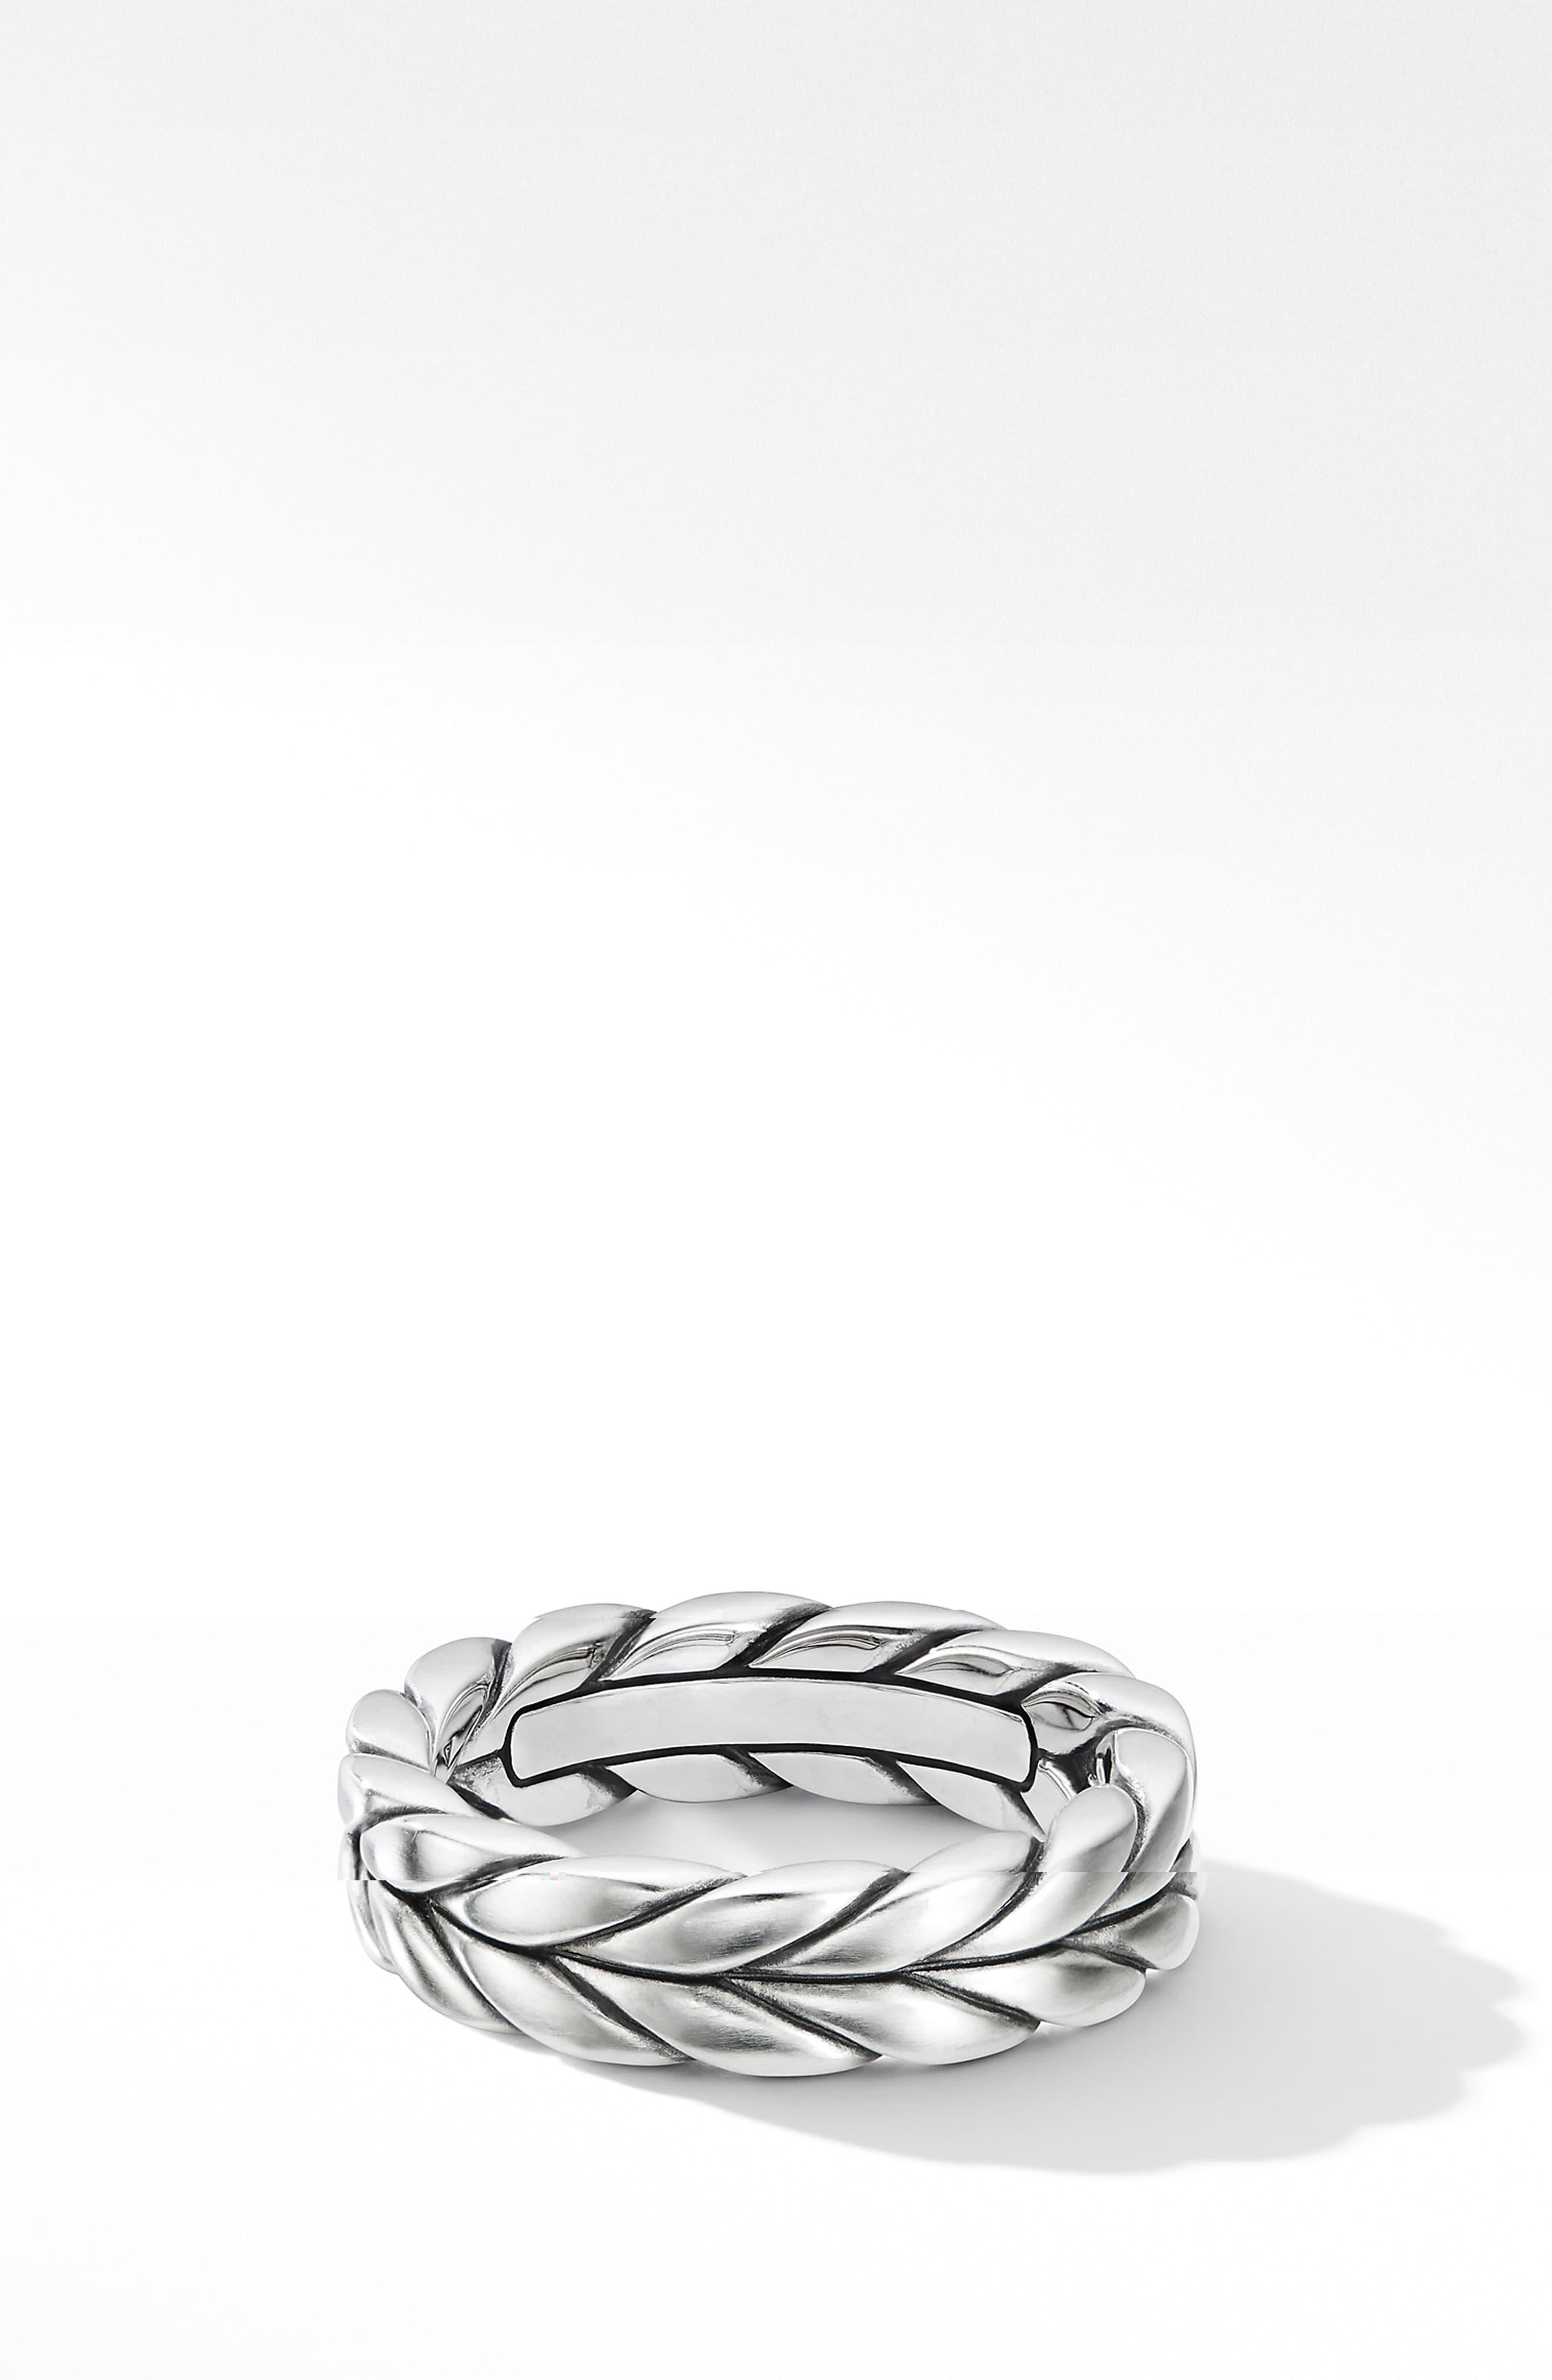 David Yurman Chevron Woven Band Ring in Silver (Metallic) for Men - Lyst